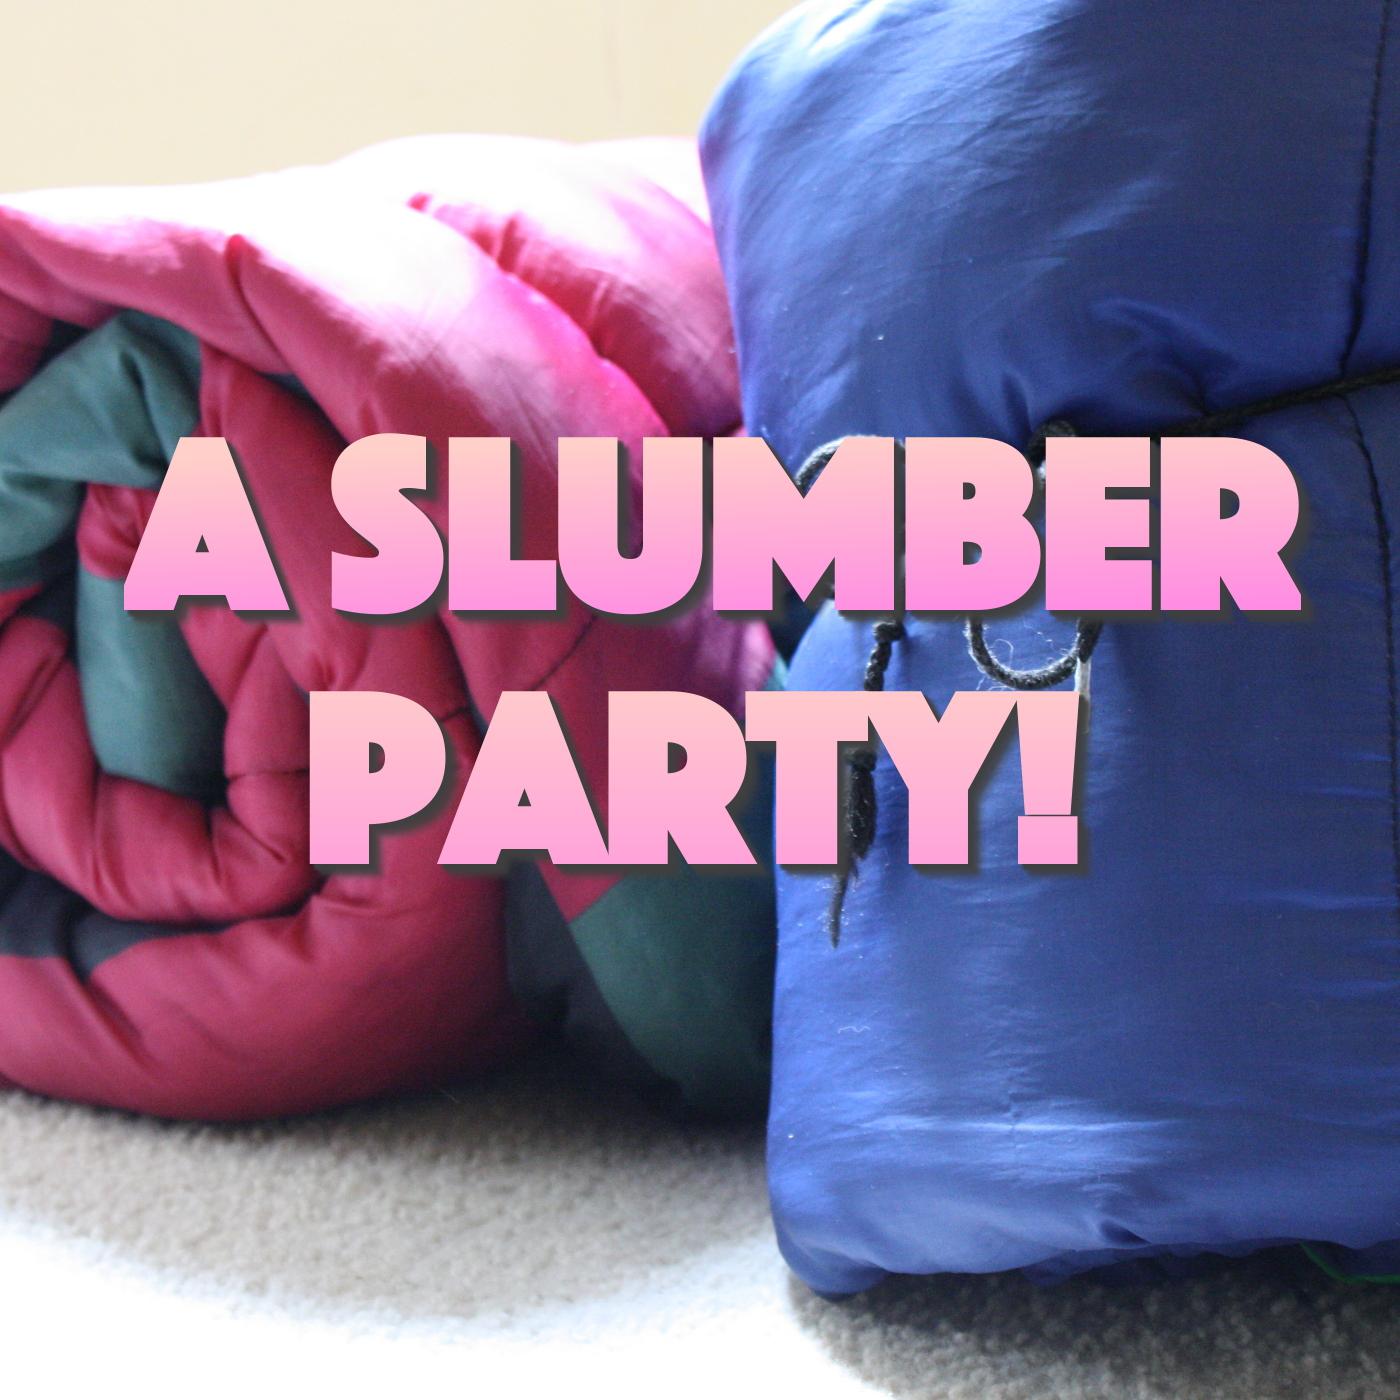 A Slumber Party!